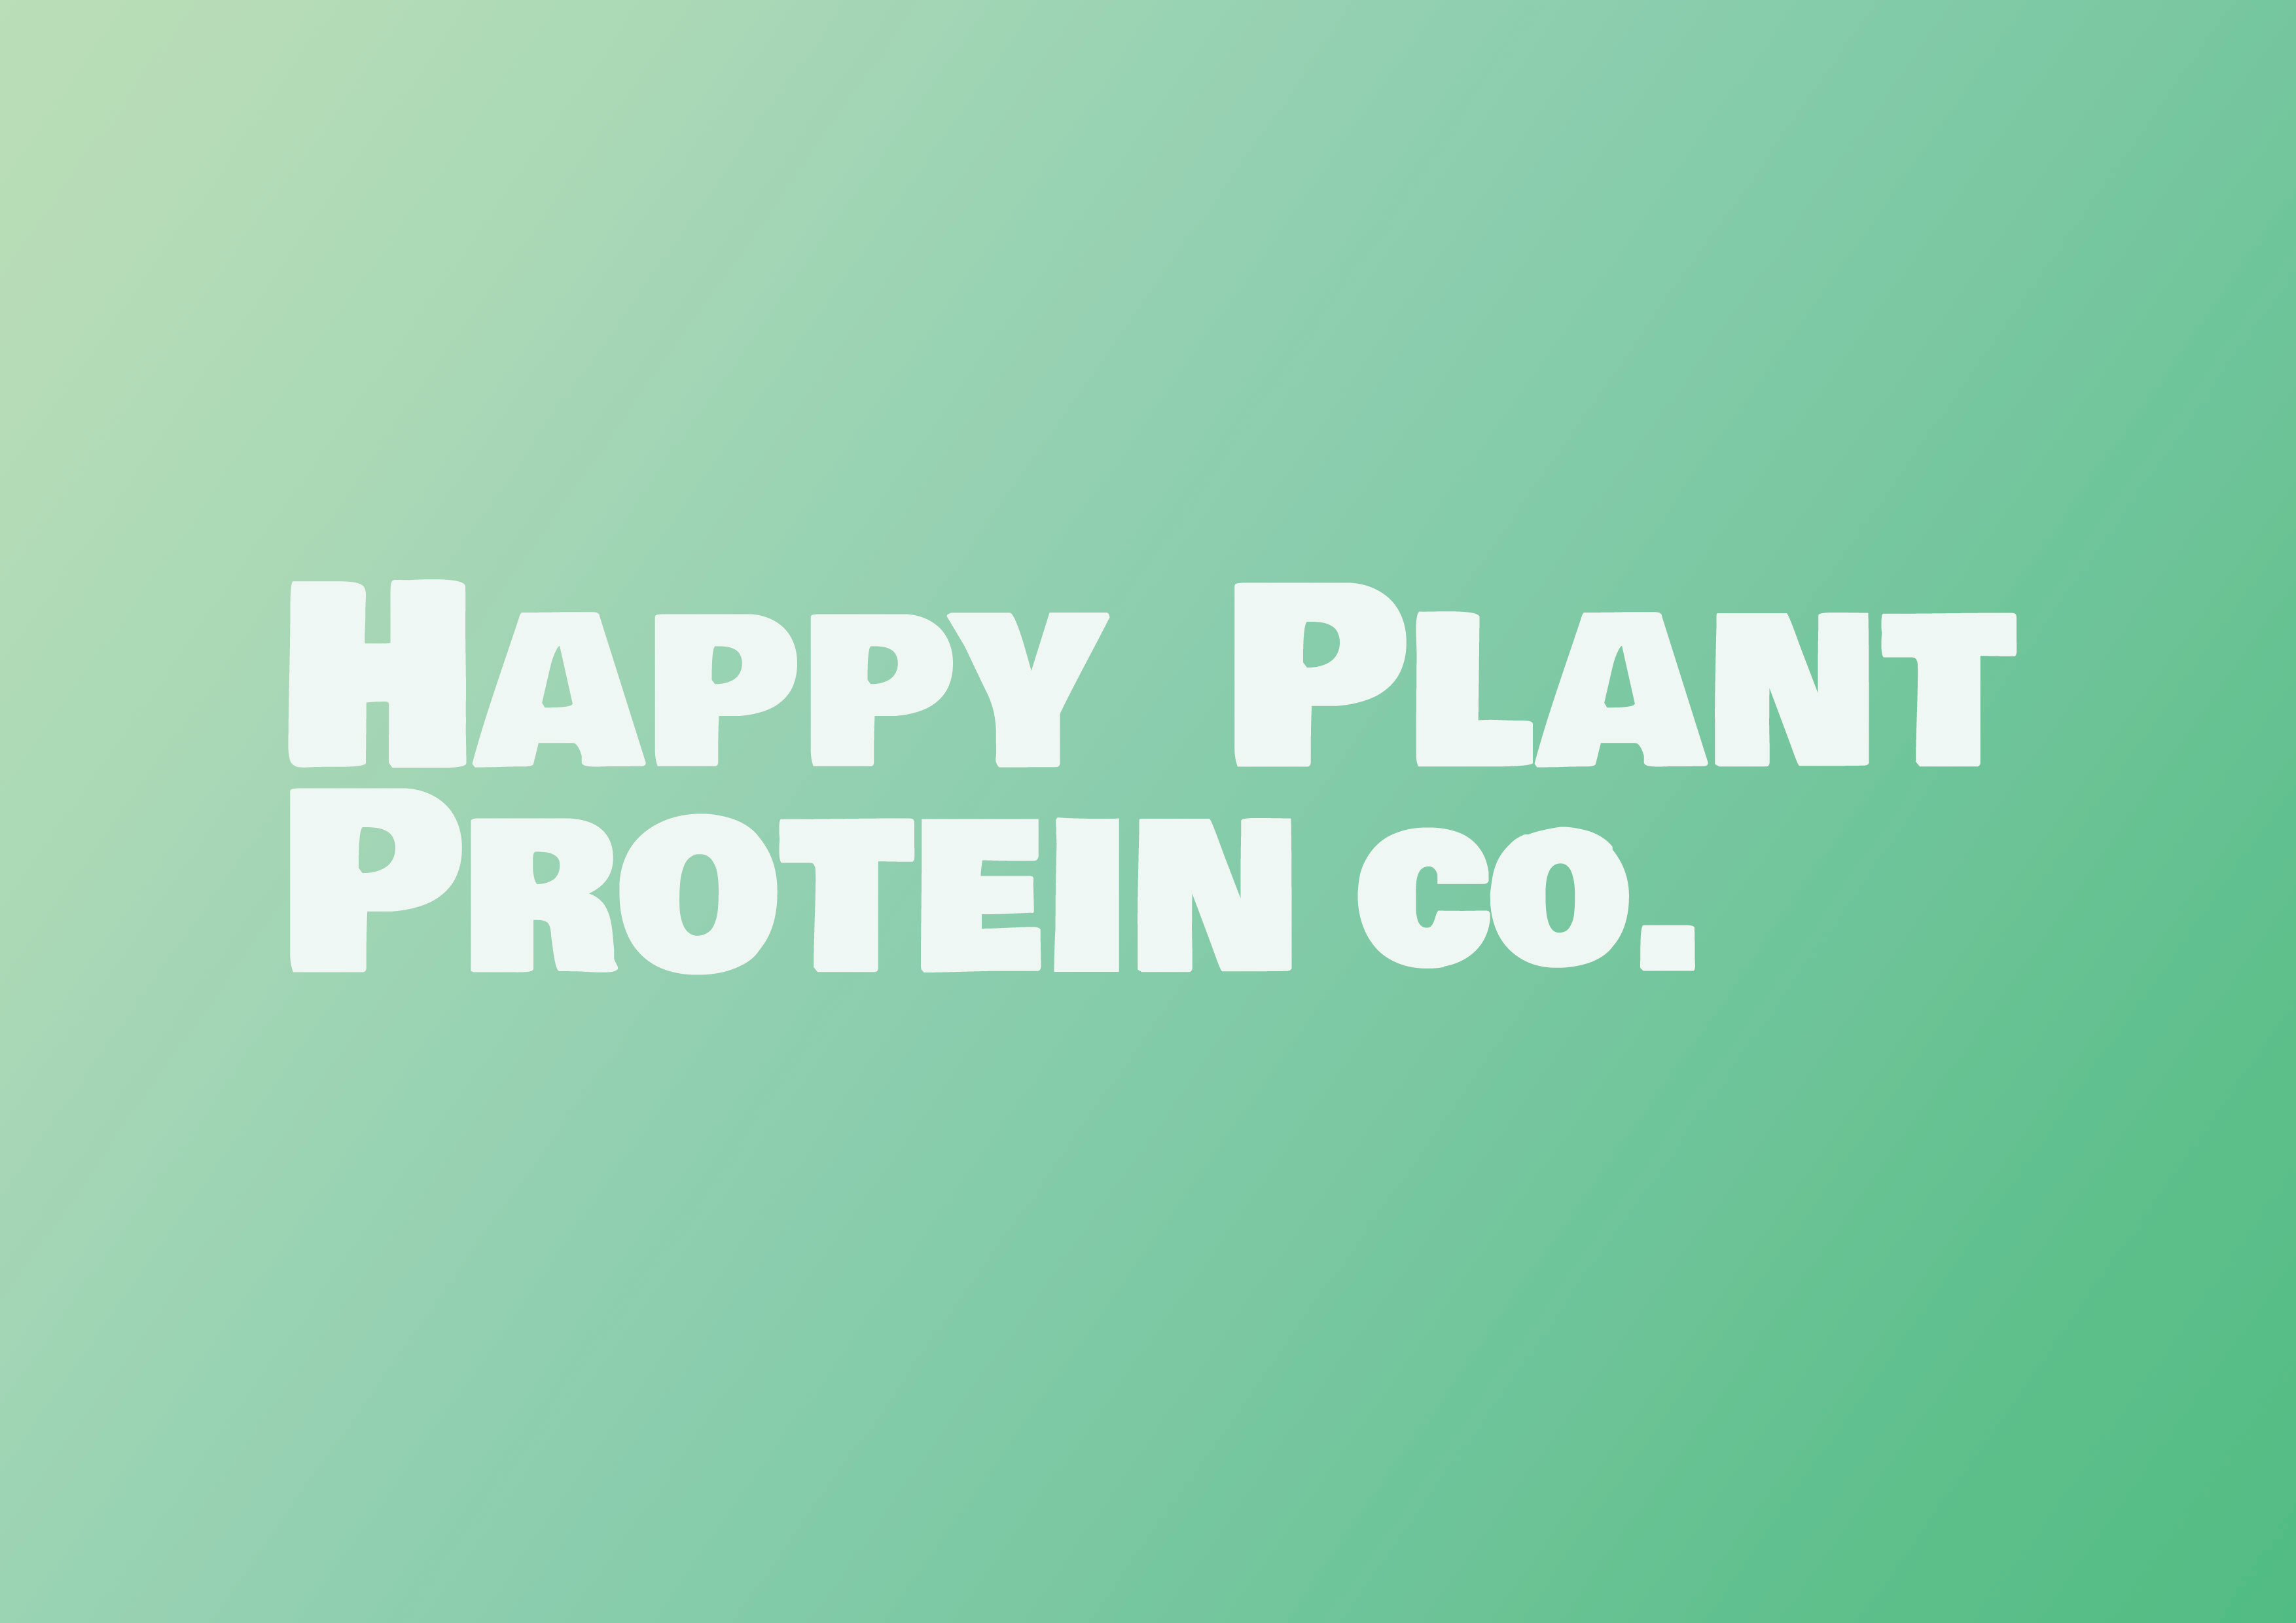 Happy Plant Protein Co